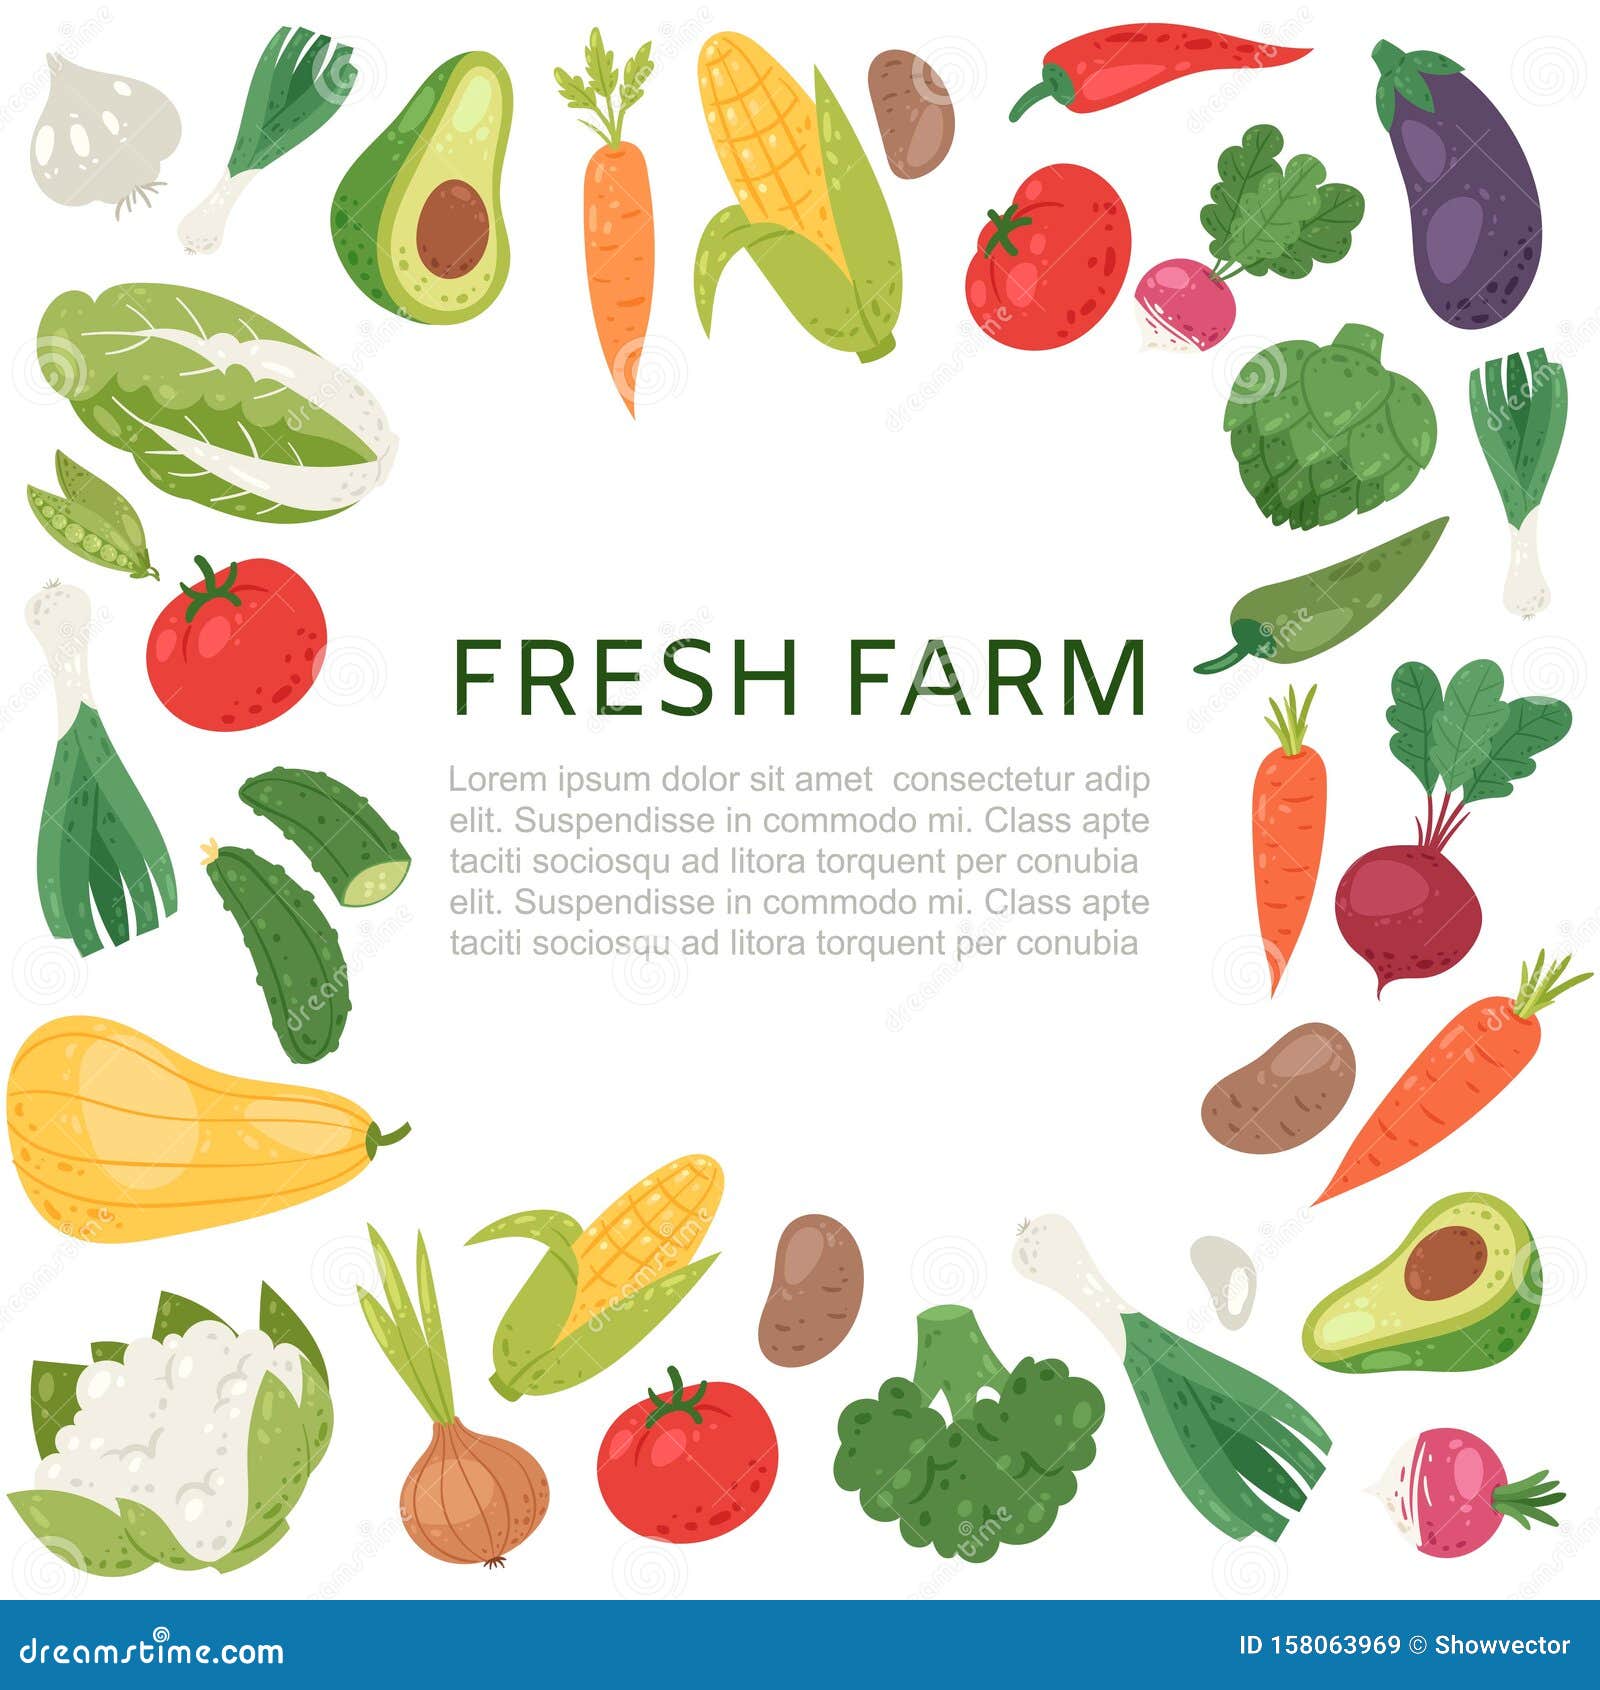 Farm Vegetable Frame Vector Illustration Fresh Veggies With Pepper And